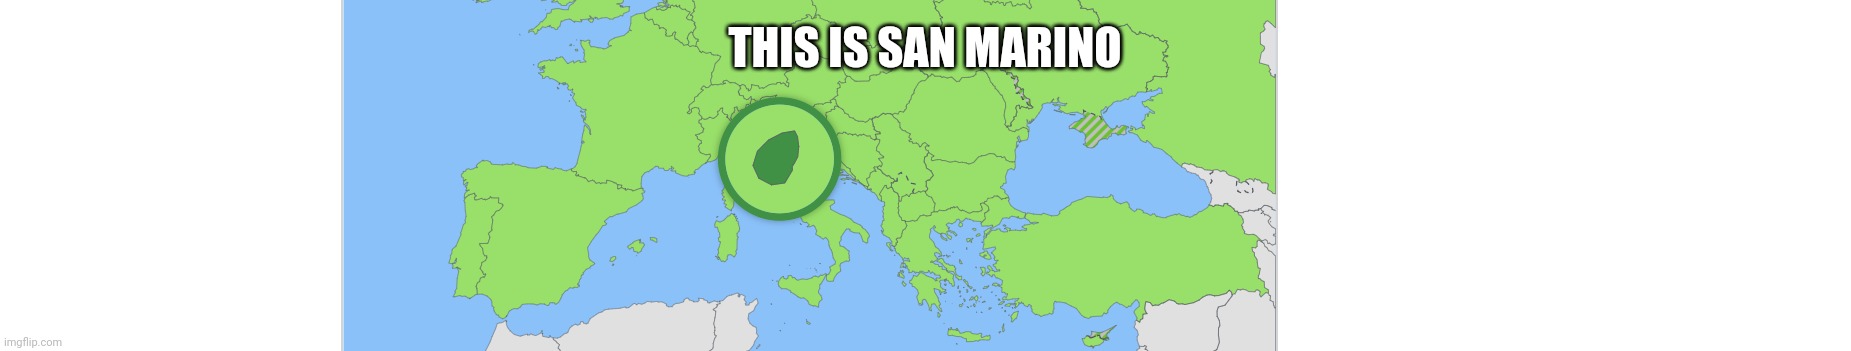 San Marino | THIS IS SAN MARINO | image tagged in san marino | made w/ Imgflip meme maker